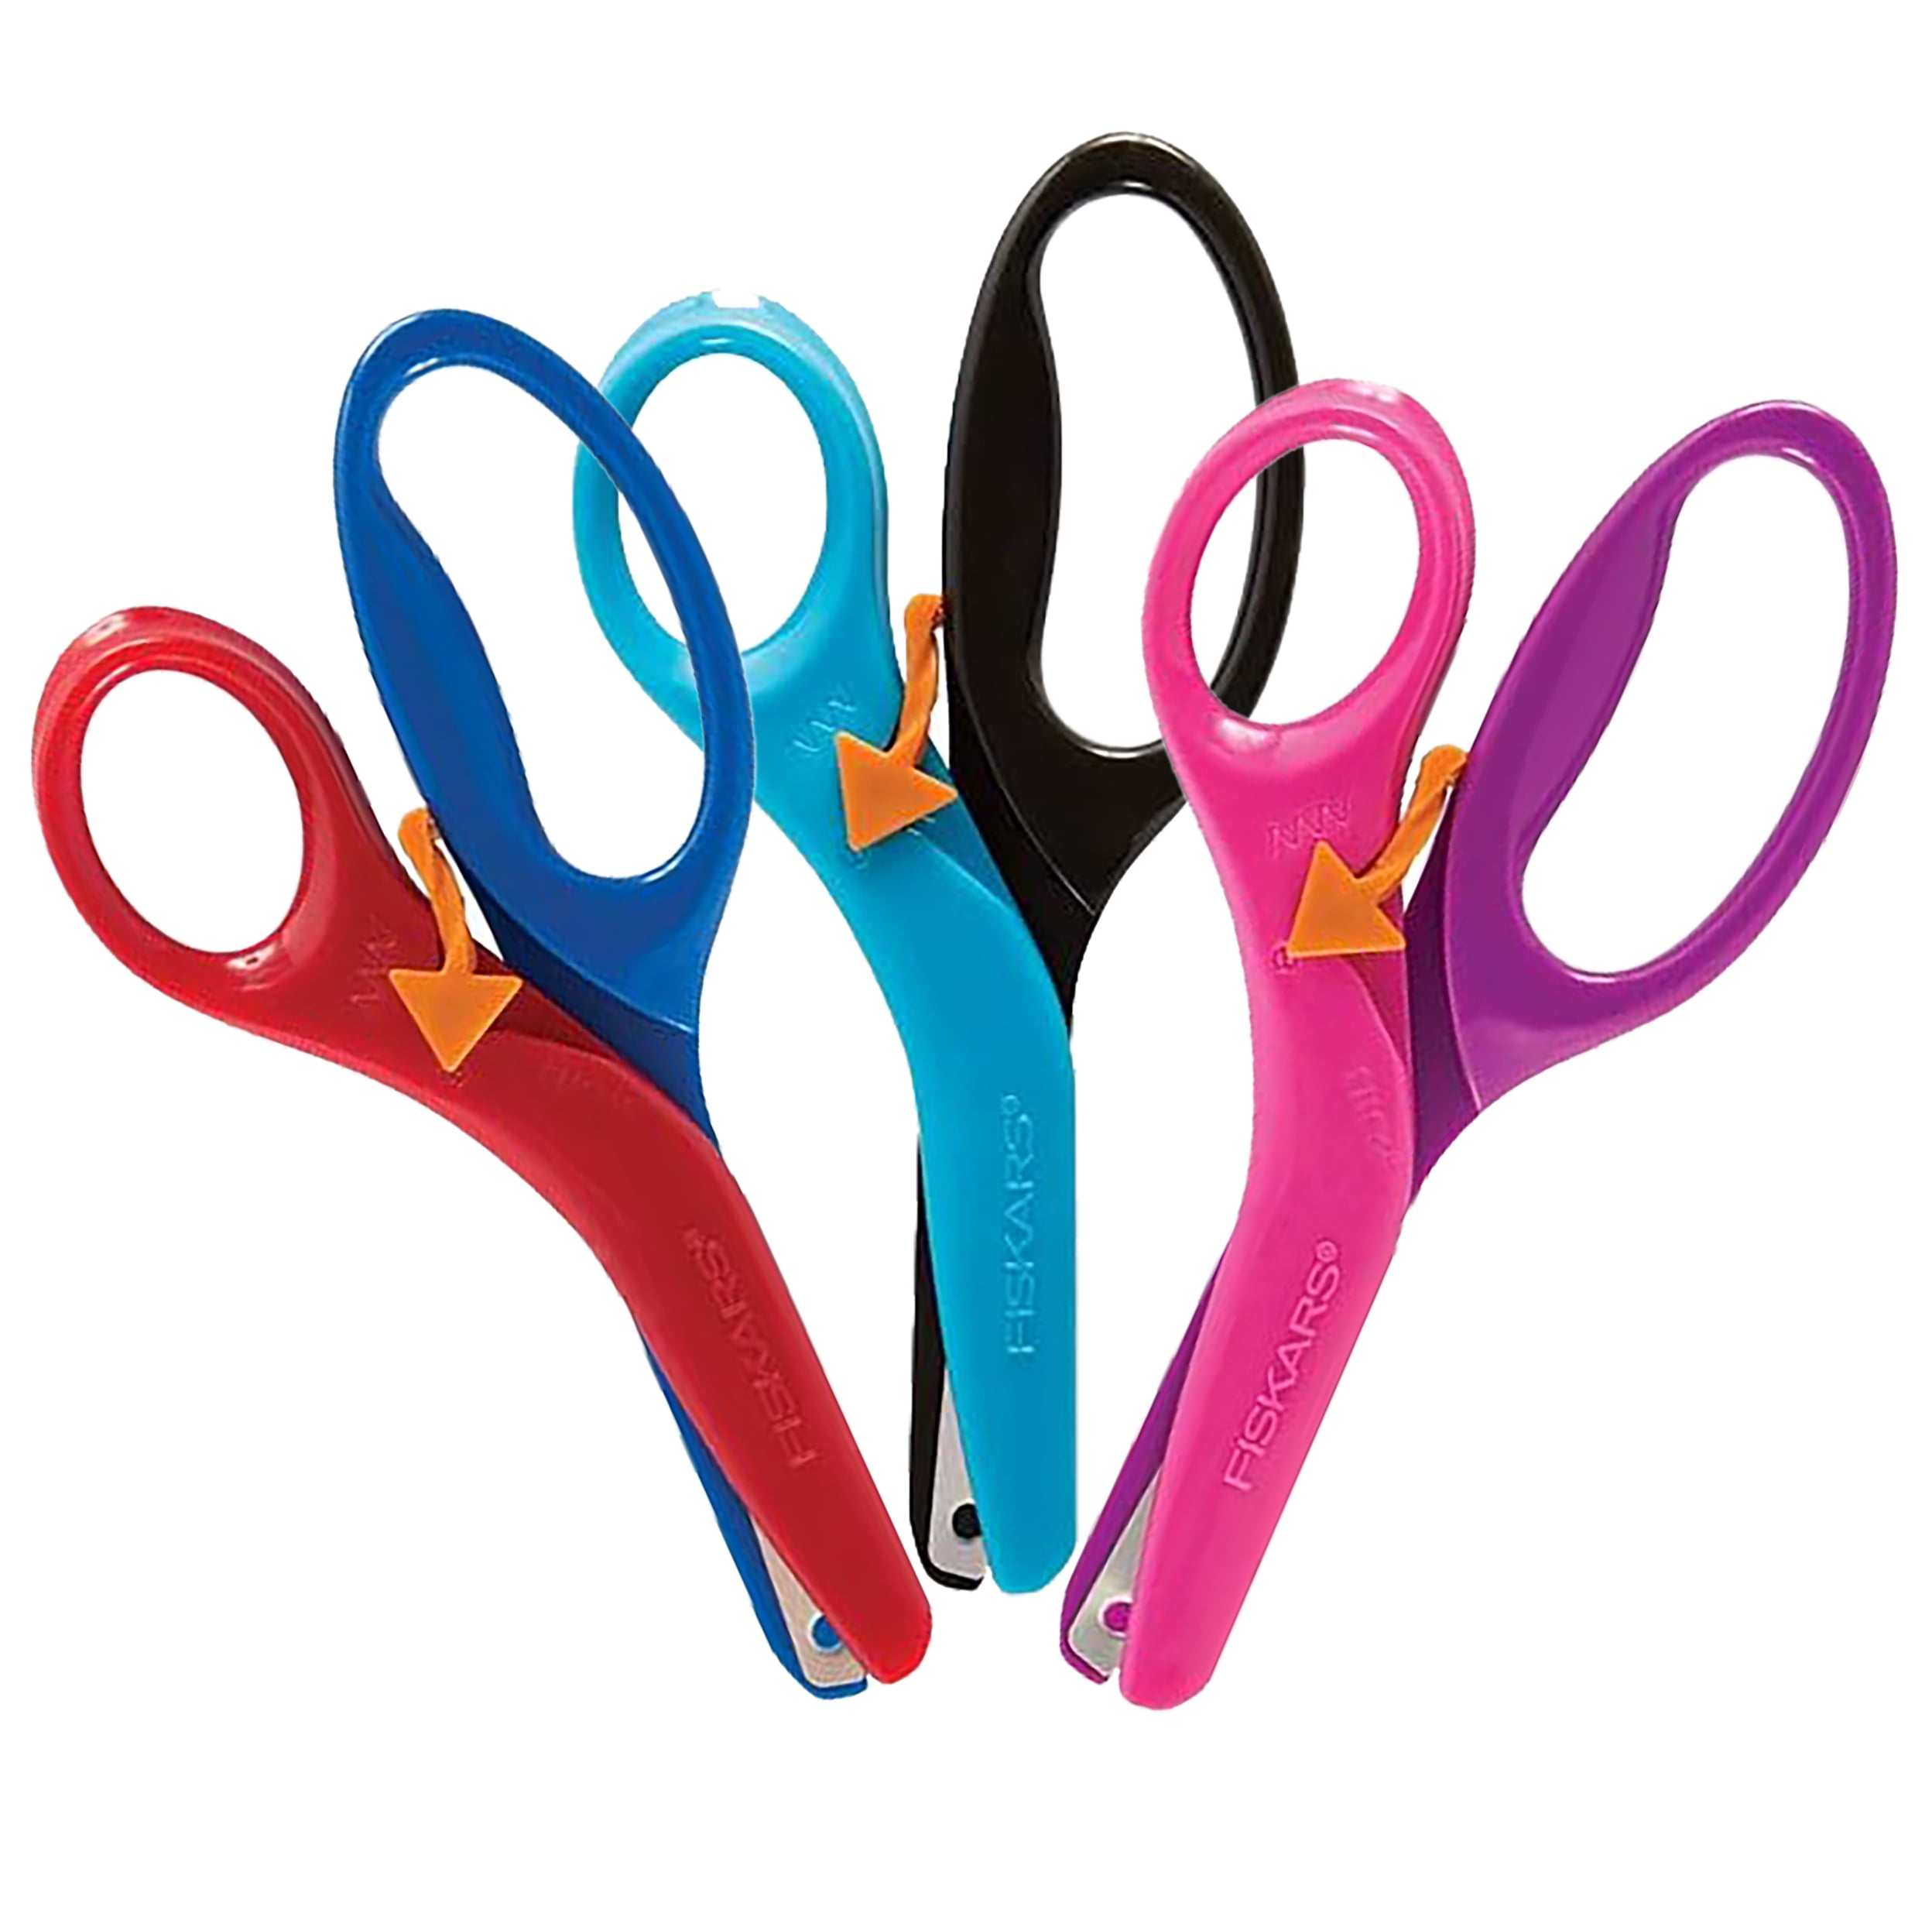 Training Scissors, 450+ Favorites Under $10, Training Scissors from  Therapy Shoppe Training Scissors, Beginner-Benbow-Fiskars-Loop Scissors